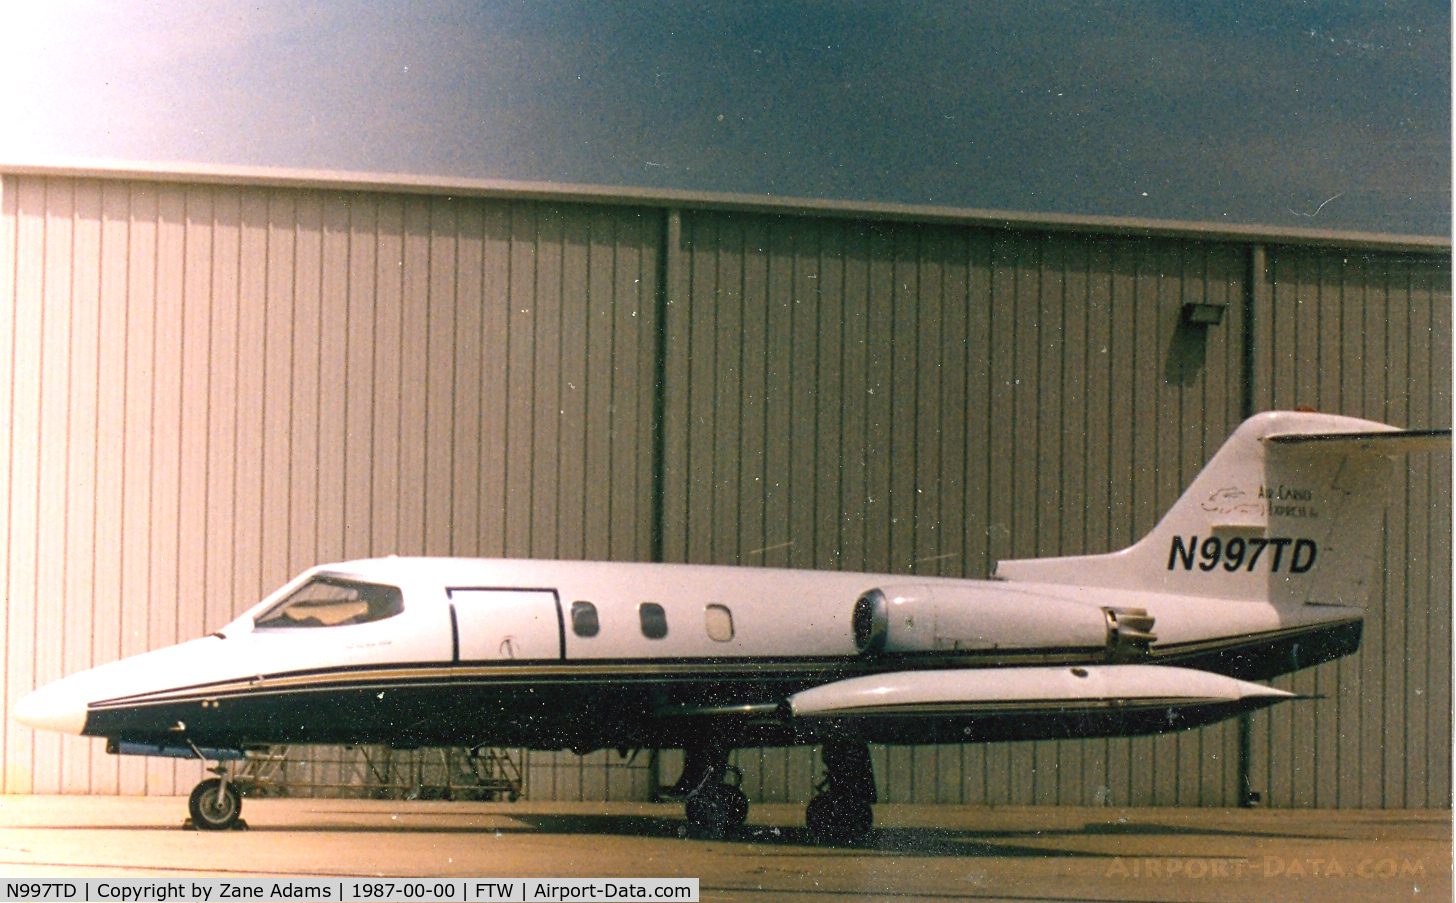 N997TD, 1972 Gates Learjet 24D C/N 24D-247, Air Cargo Express Learjet at Meacham Field